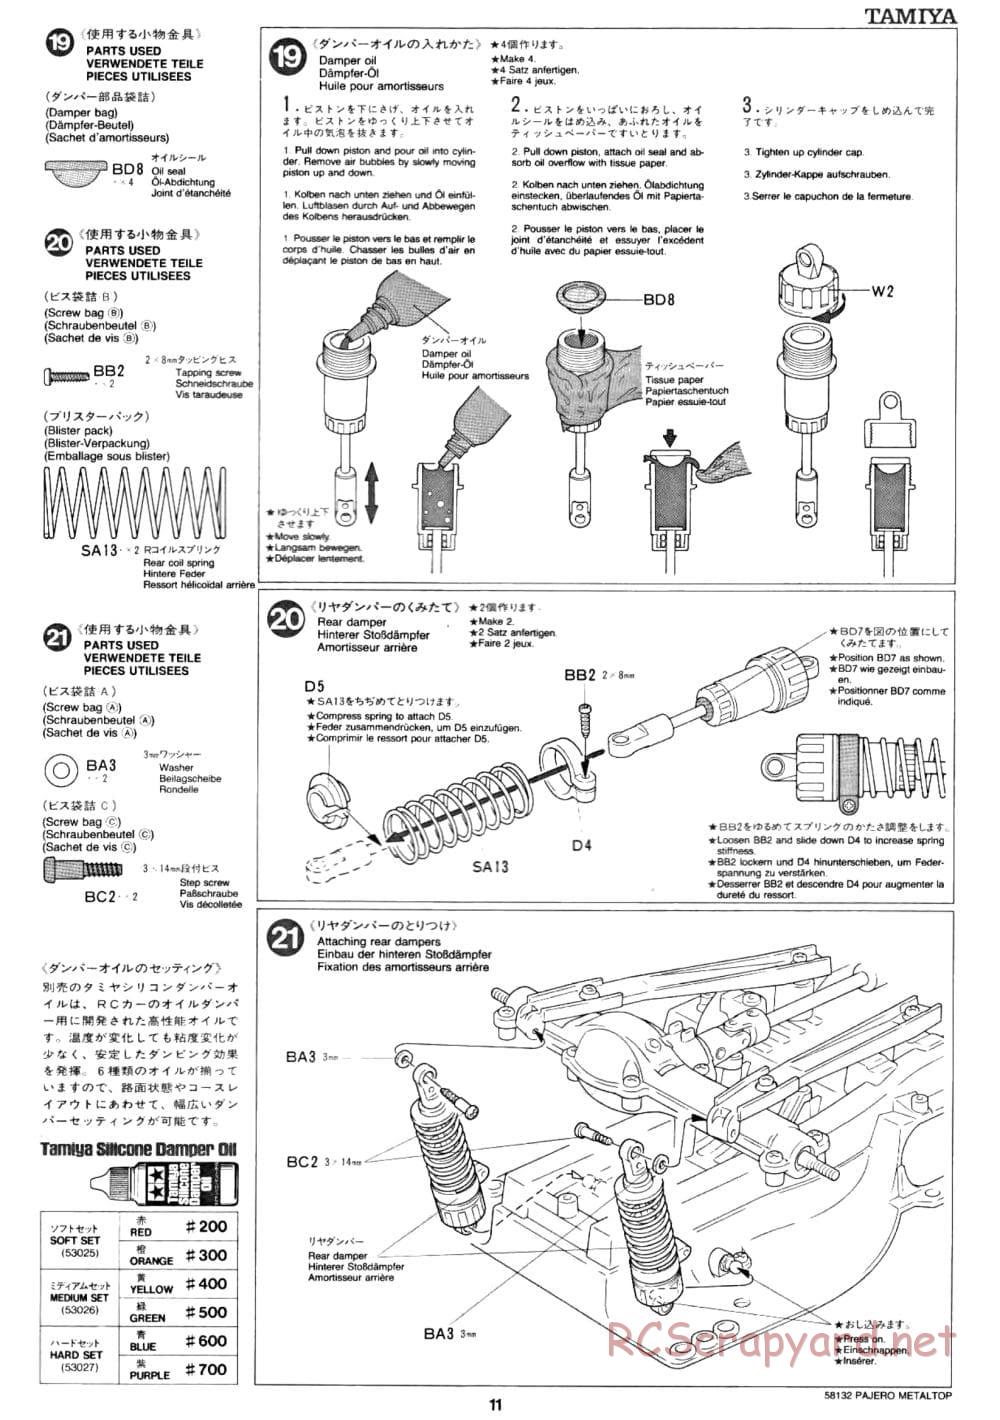 Tamiya - Mitsubishi Pajero Metaltop Wide - CC-01 Chassis - Manual - Page 11